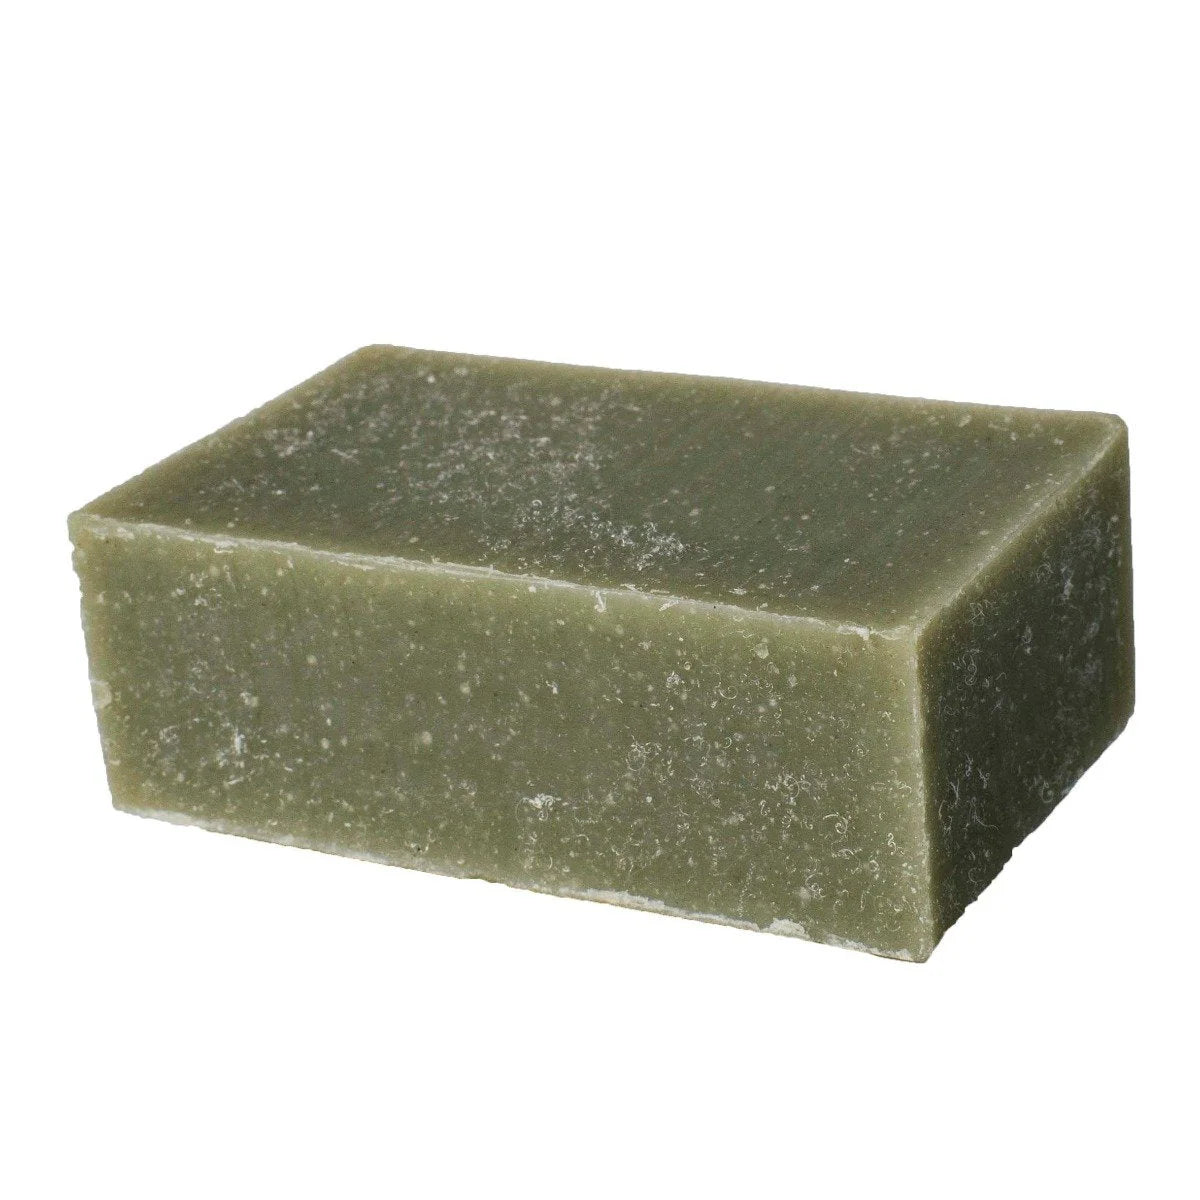 Living Libations - Clarifying Clay Soap